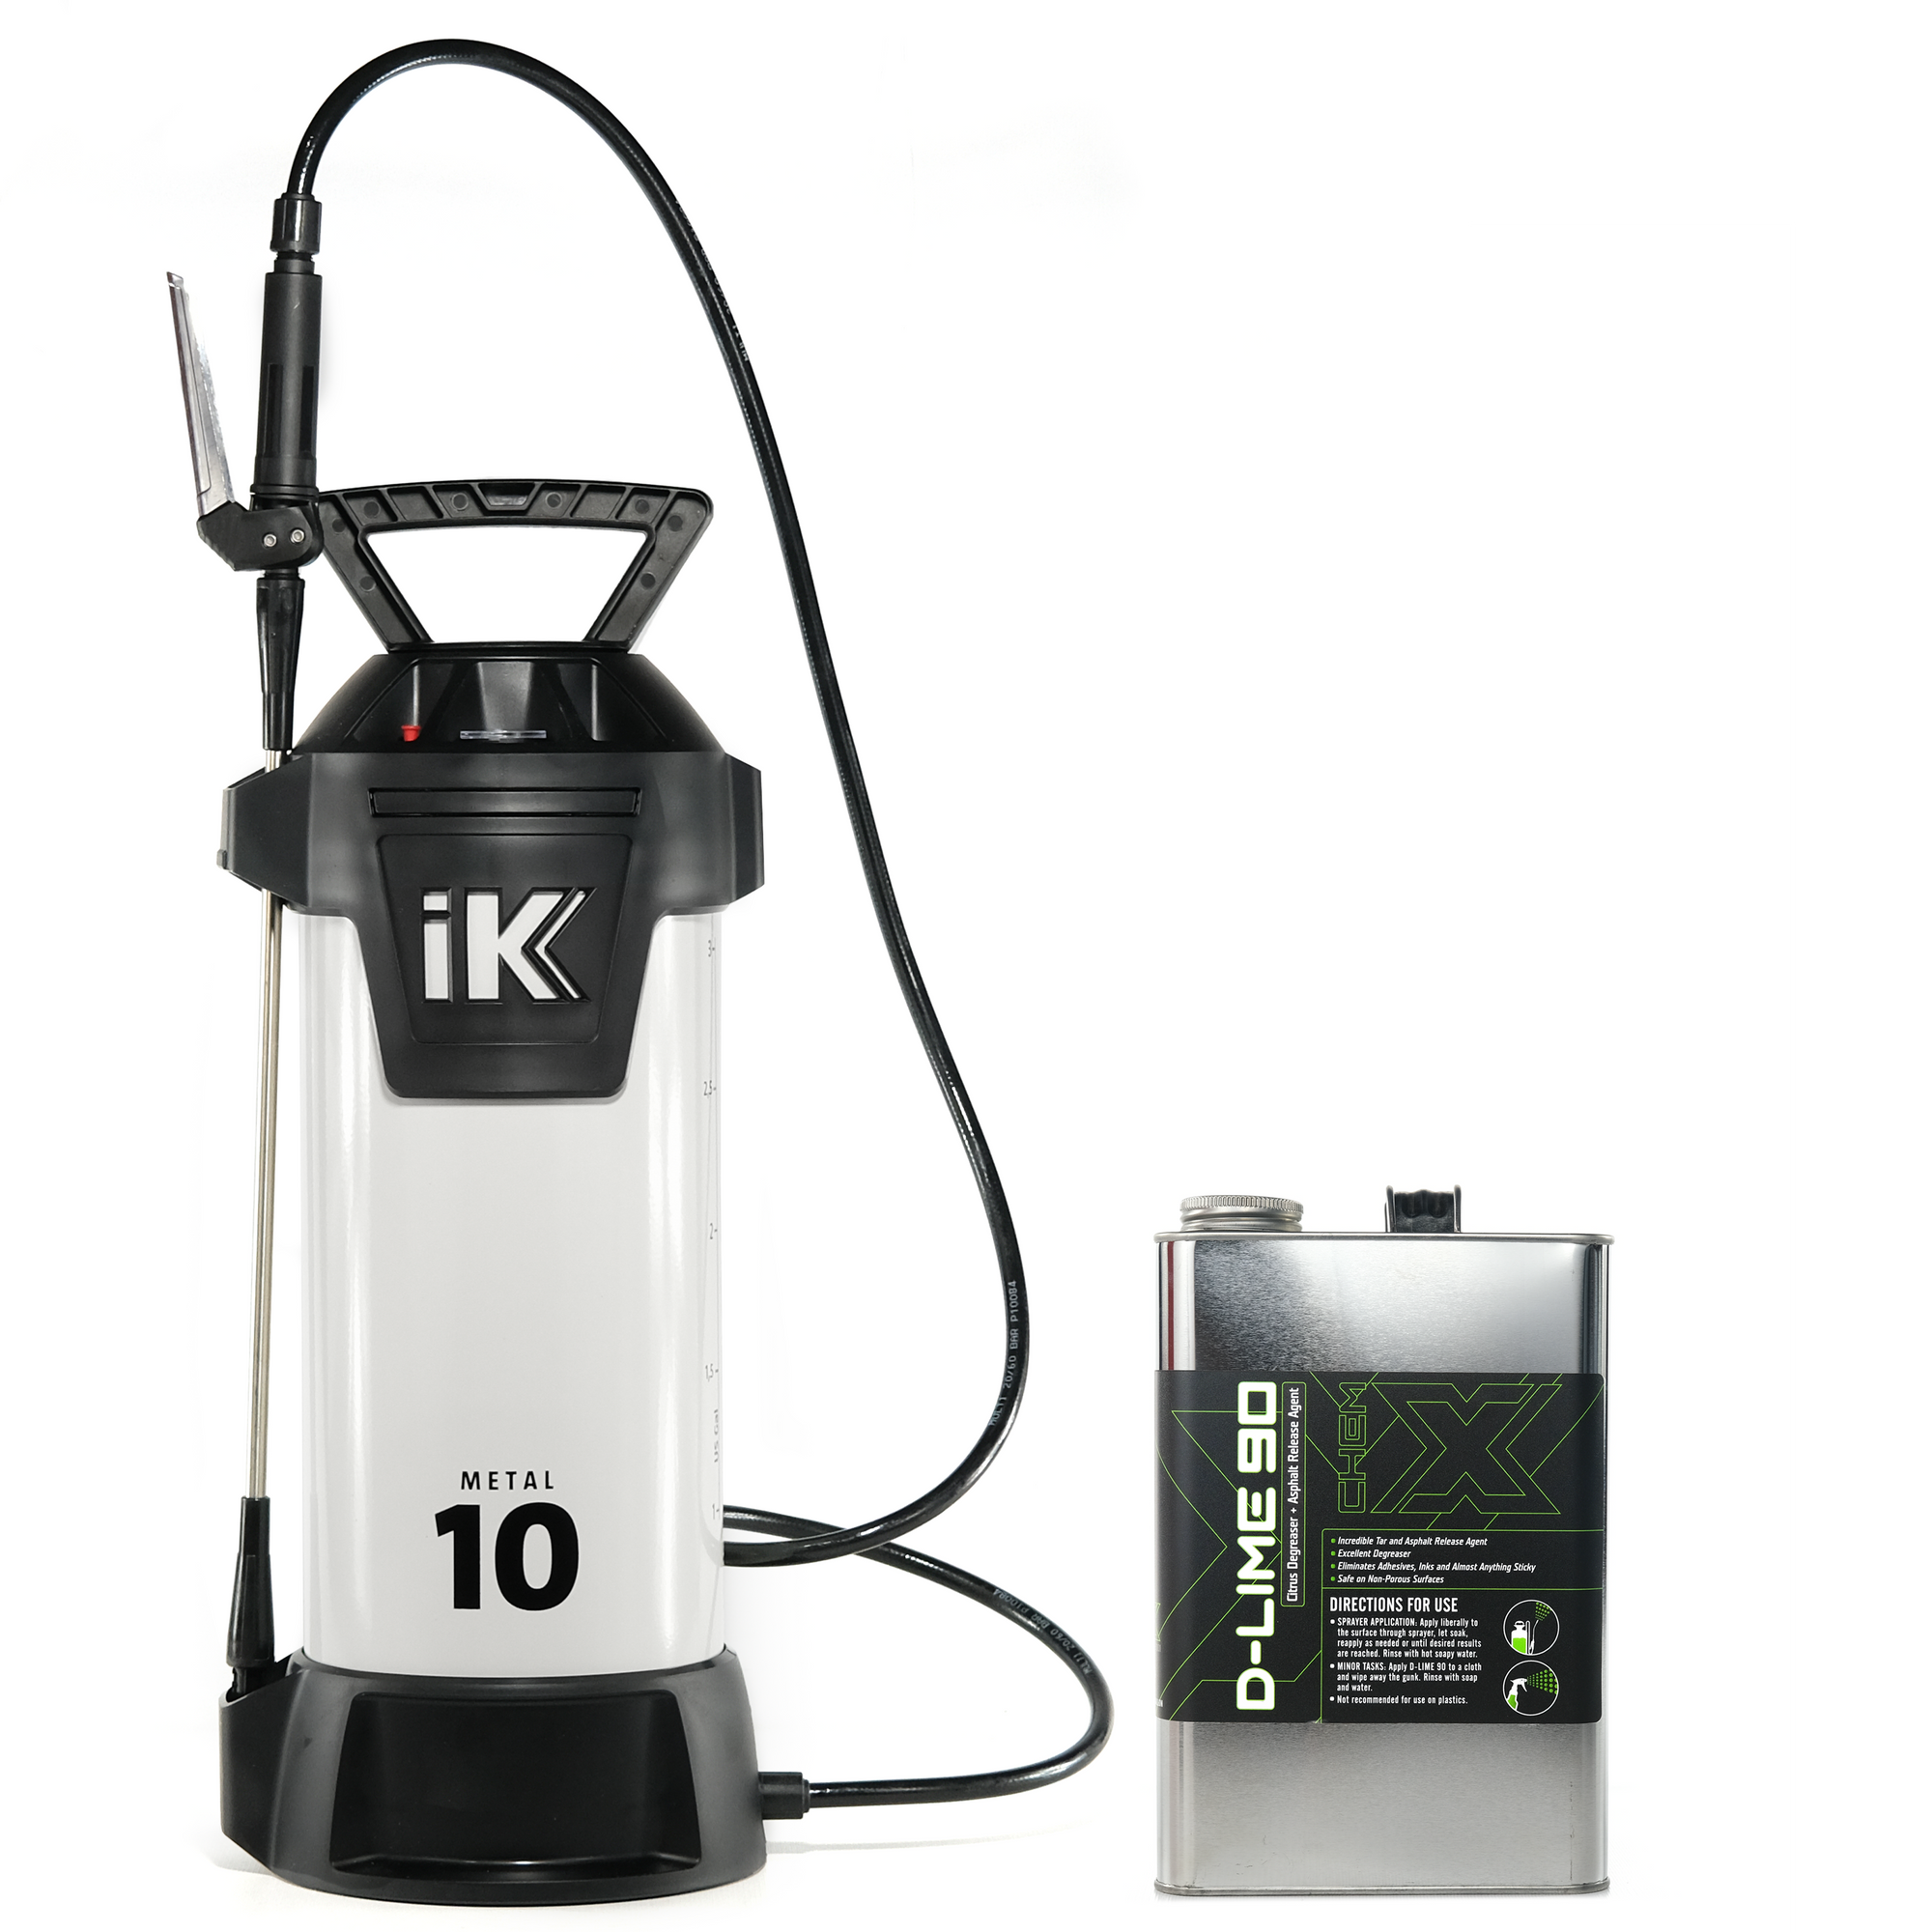 D-Lime + iK Sprayer Kit - Chem-X